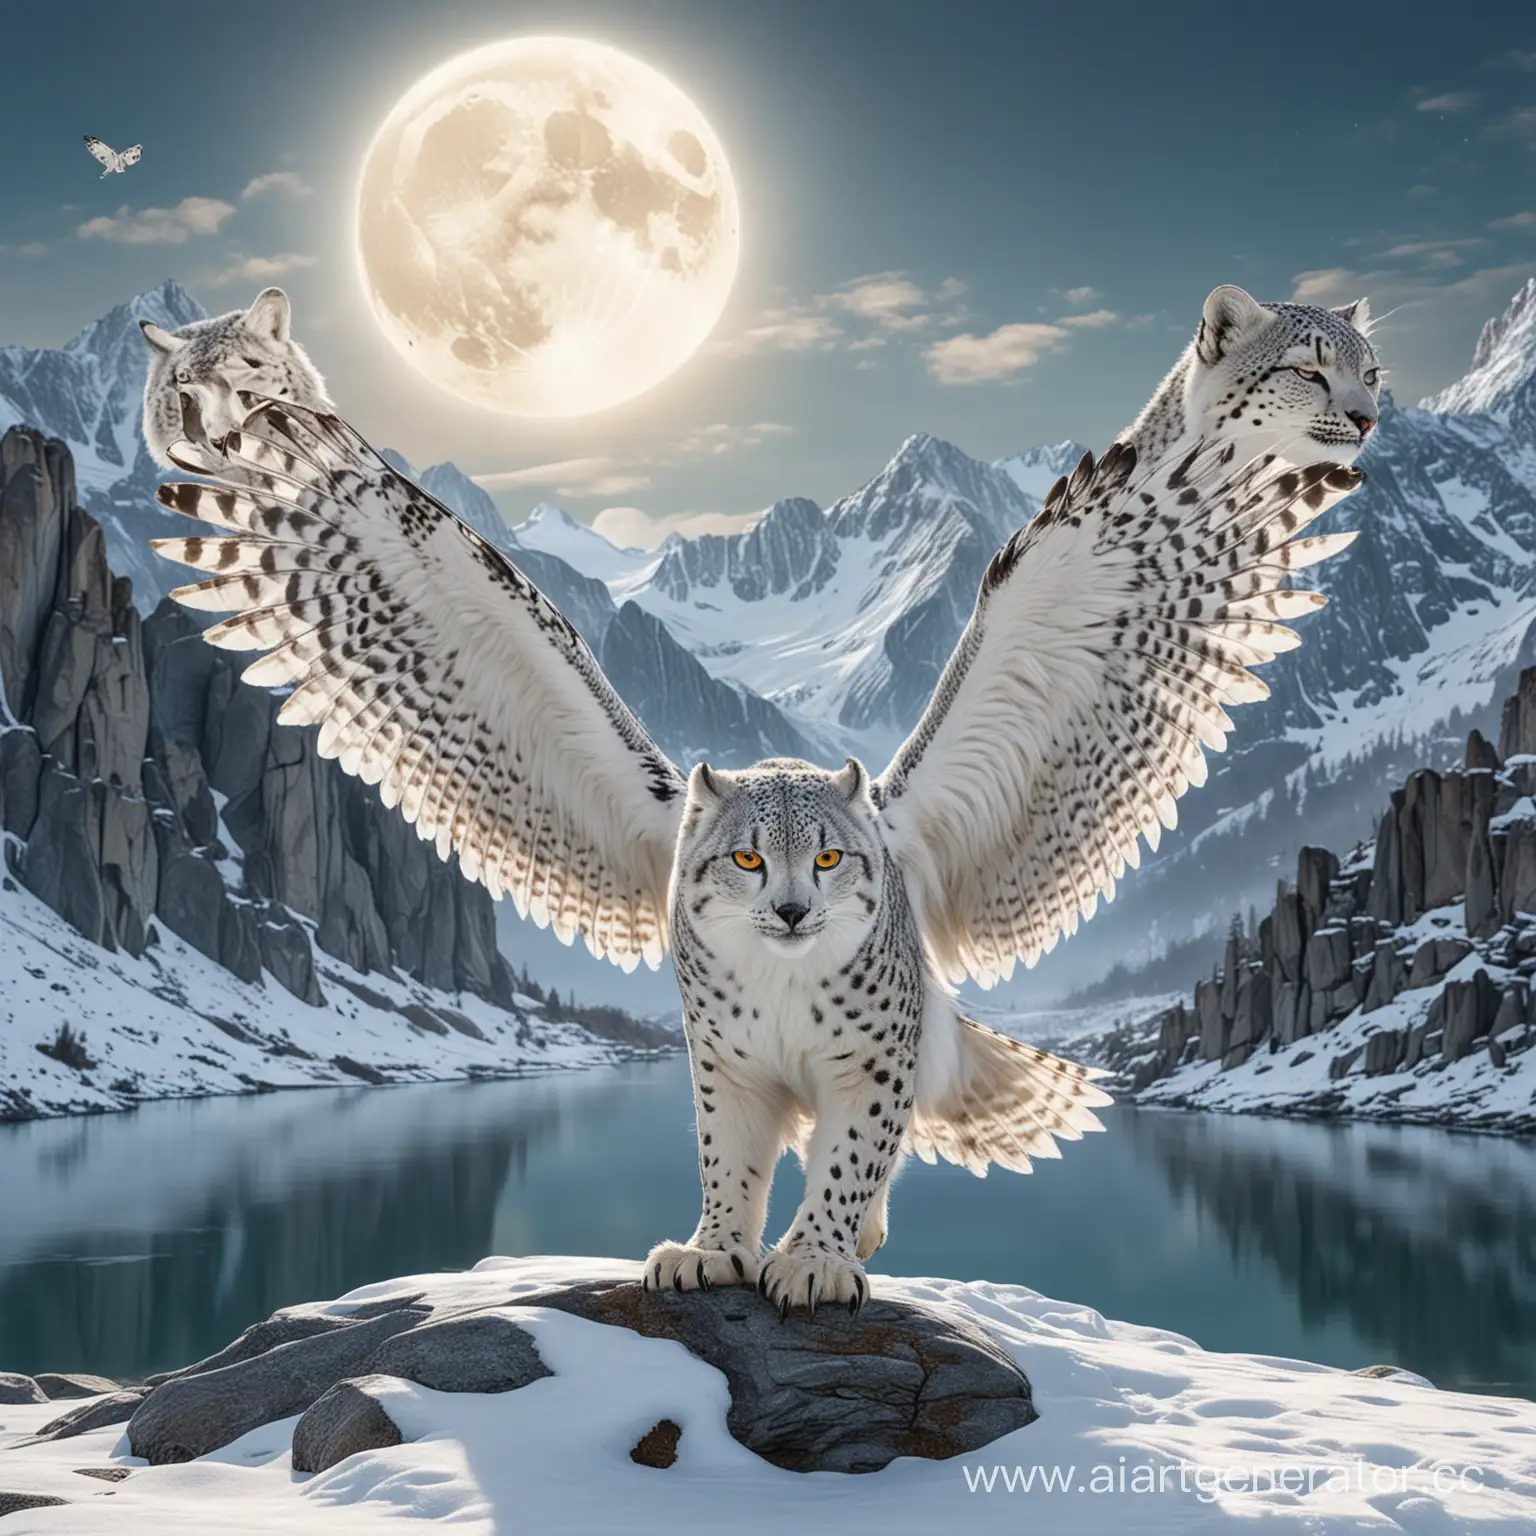 Majestic-Polar-Owl-Bird-with-Snow-Leopard-Body-Soaring-Against-Moonlit-Mountain-Landscape